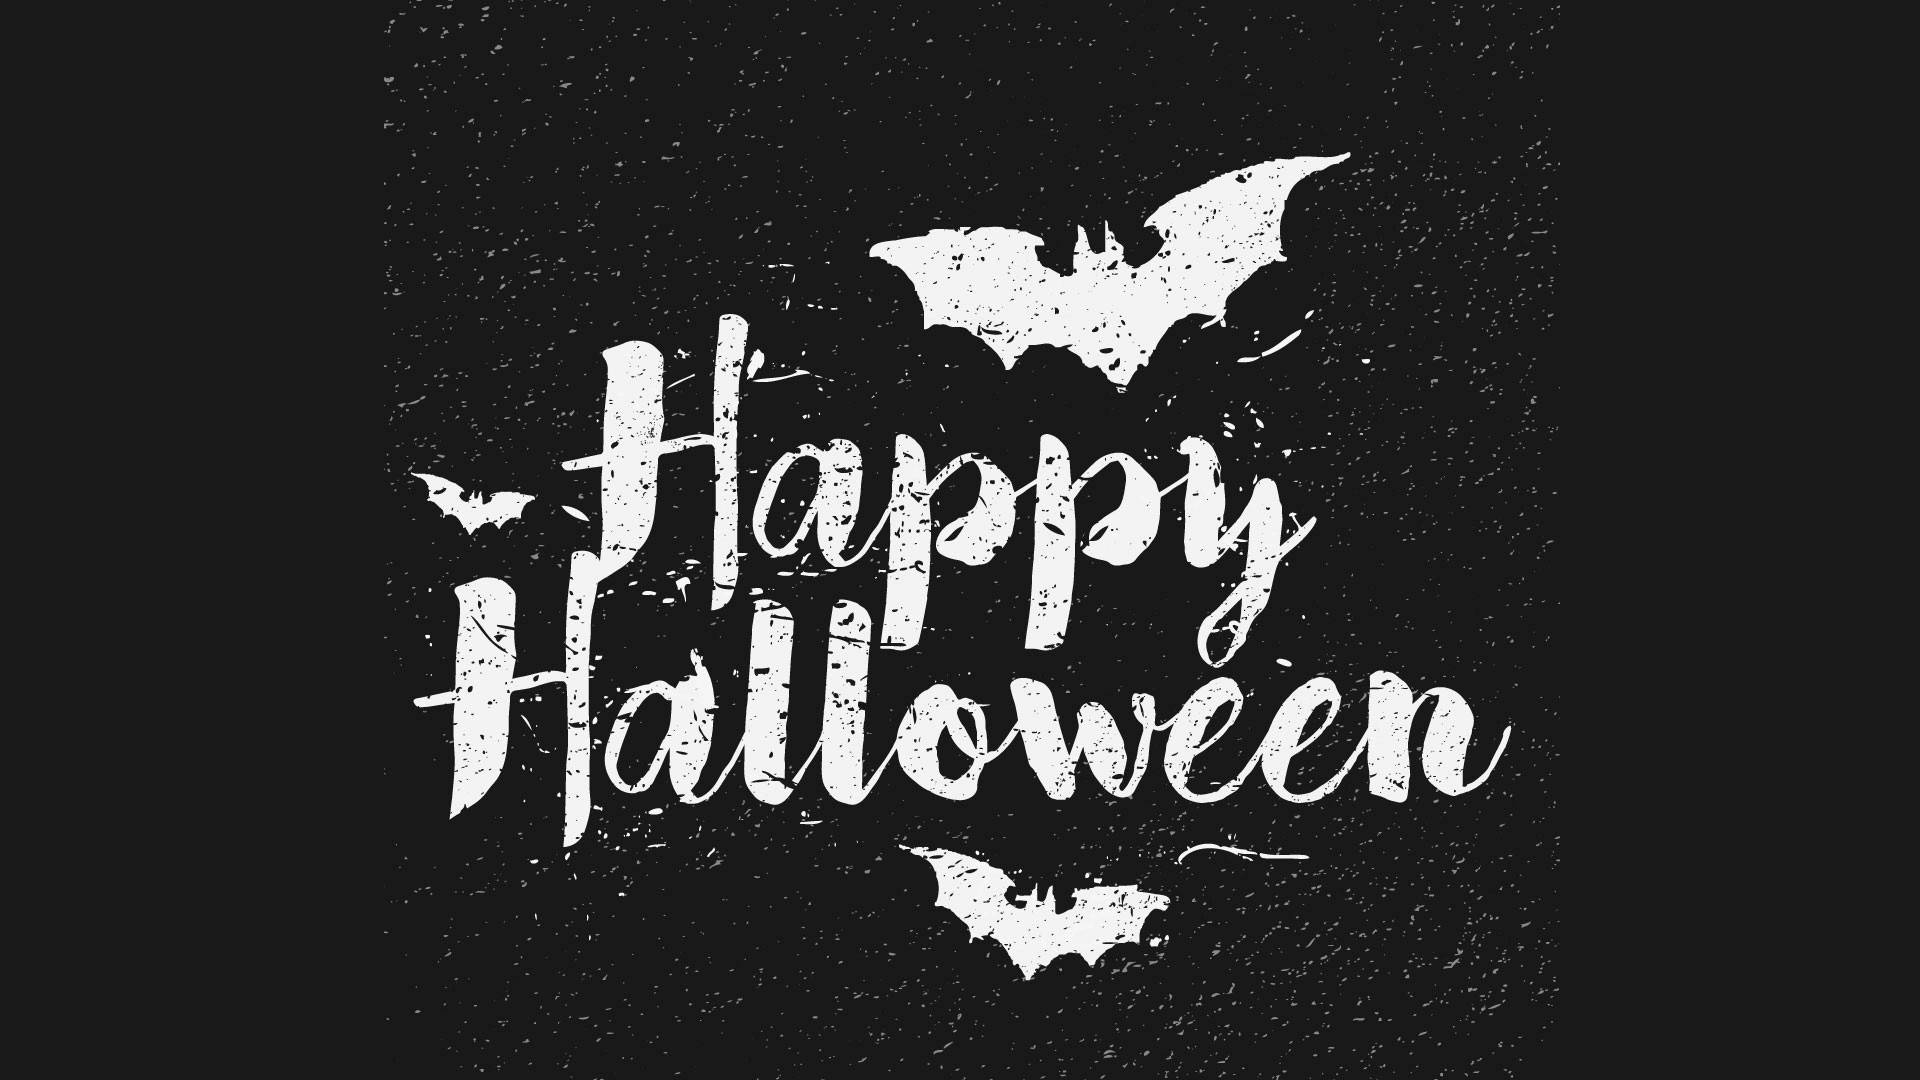 Enjoy A Spooky Halloween Night!